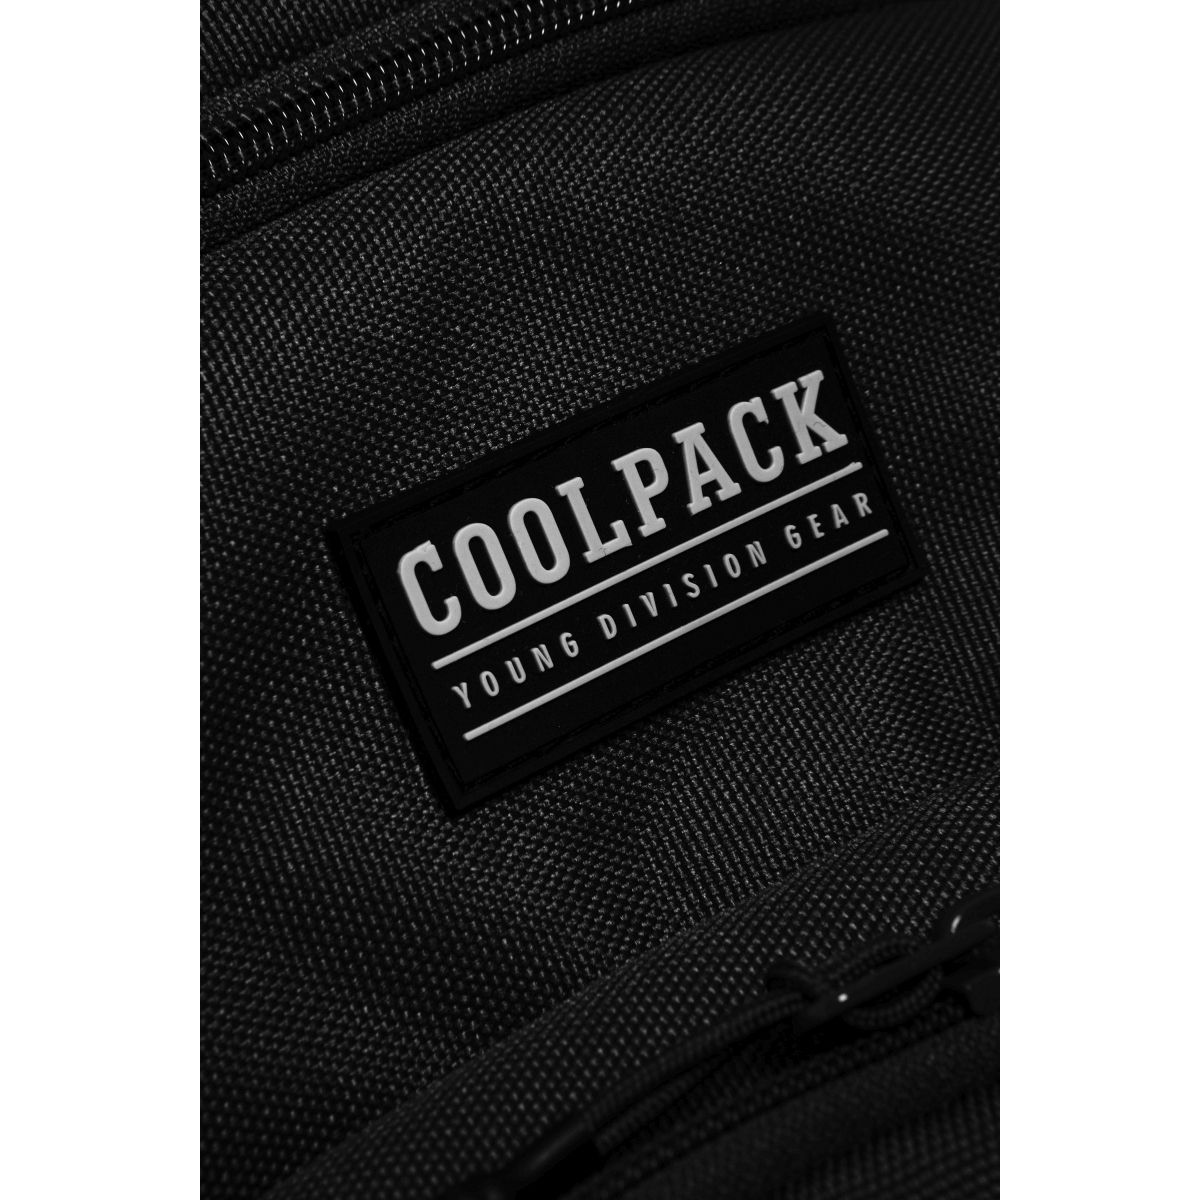 Plecak Patio cool pack ARMY (C39258)